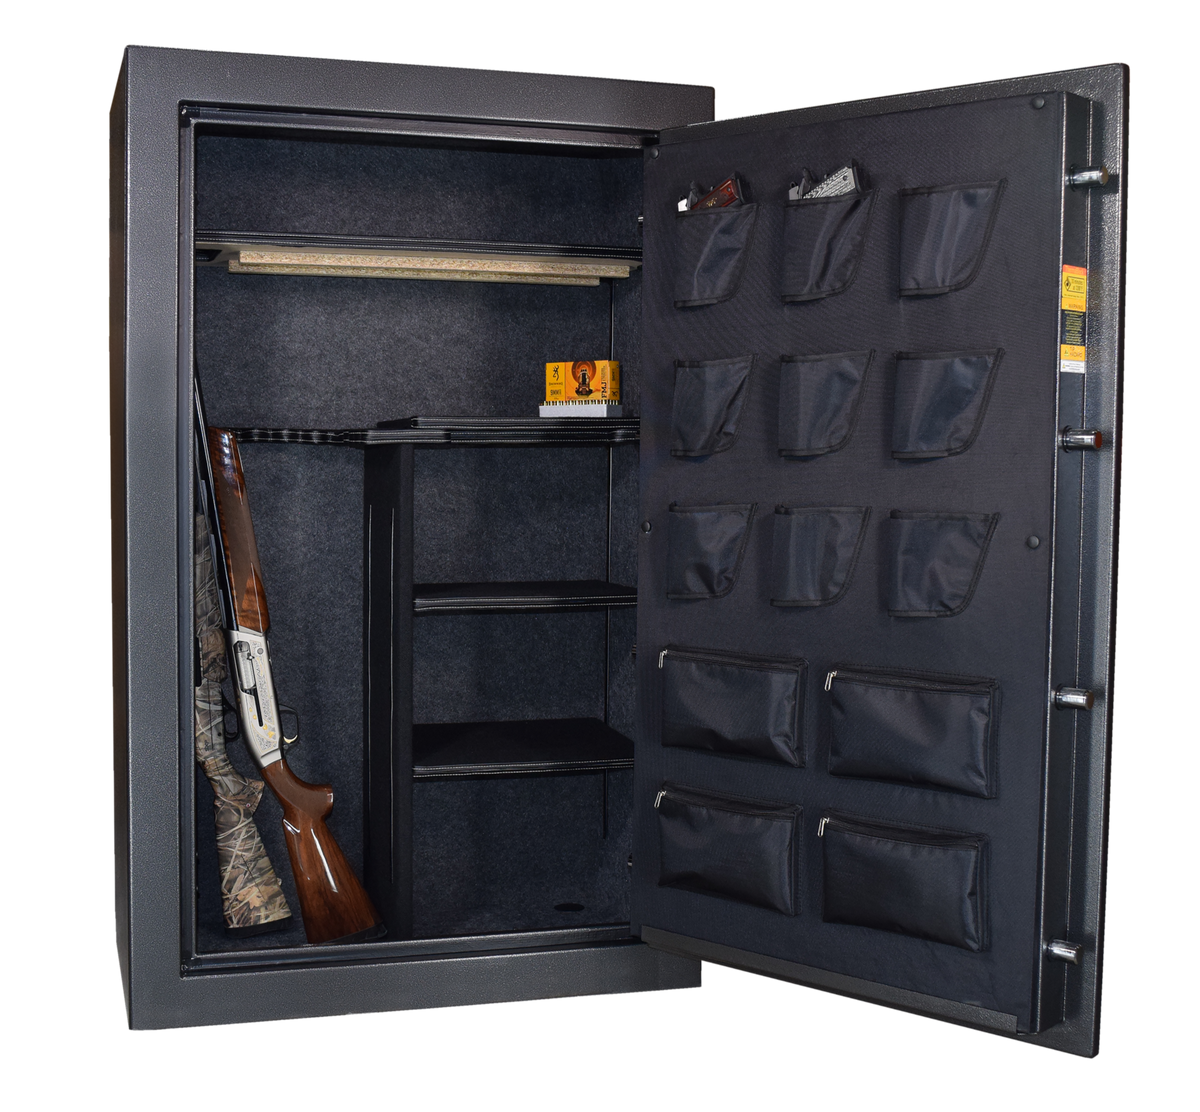 Browning TG30 Theftgard Series Gun Safe Door Open